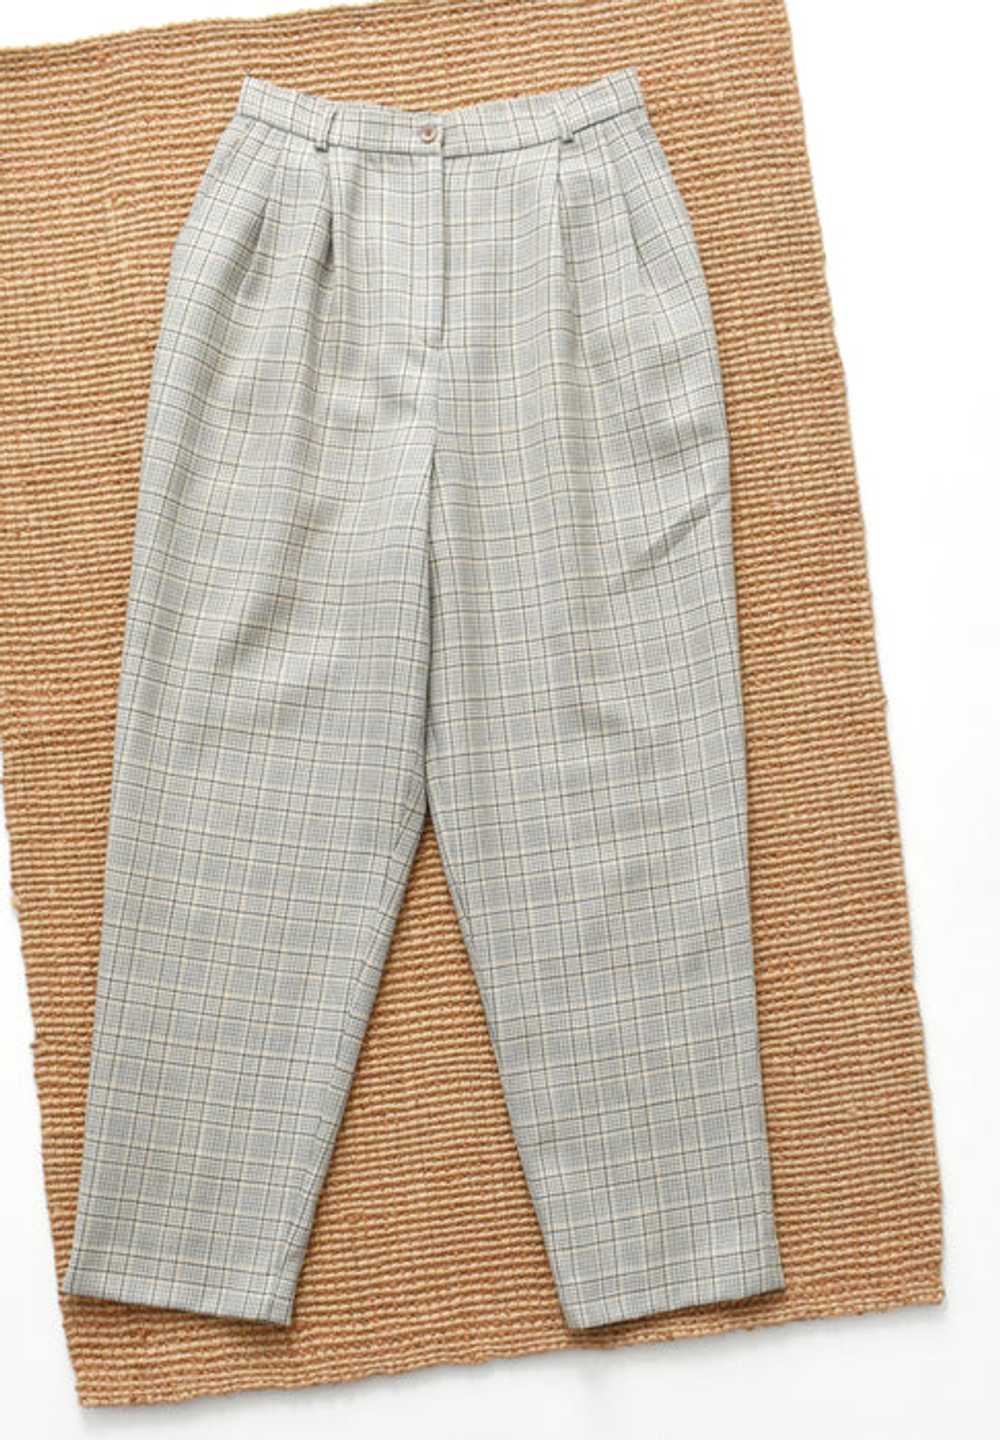 vintage plaid wool trousers (m) - image 6